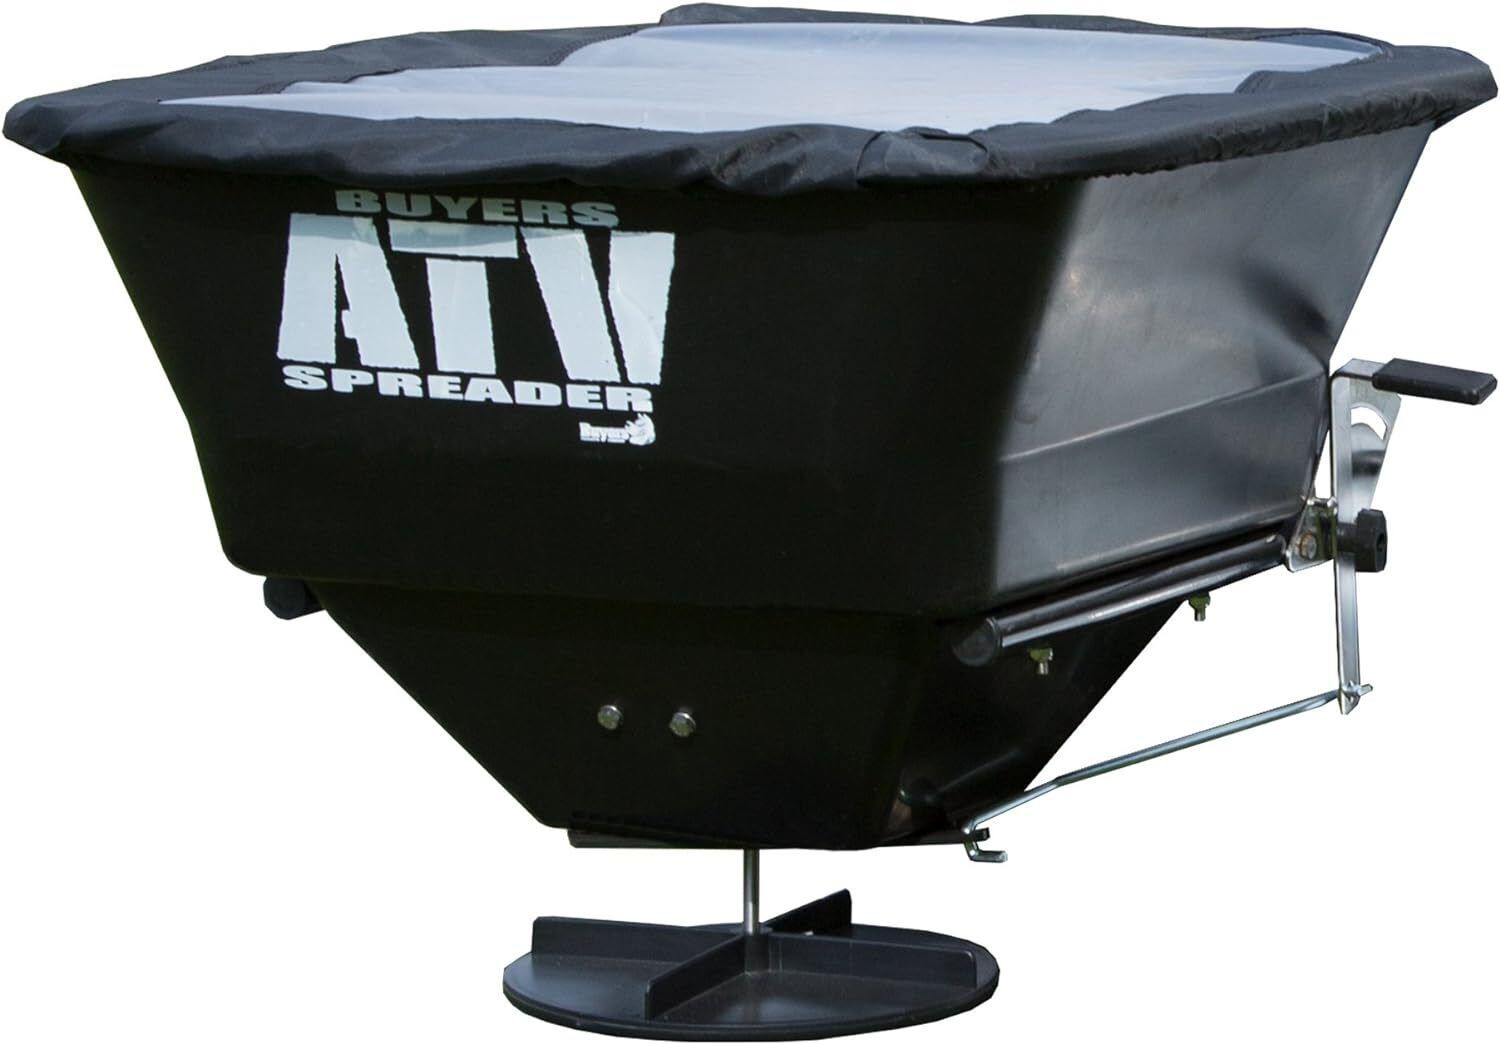 ATVS100 ATV Broadcast Spreader, All-Purpose Spreader for Salt, Seed & Fertilizer